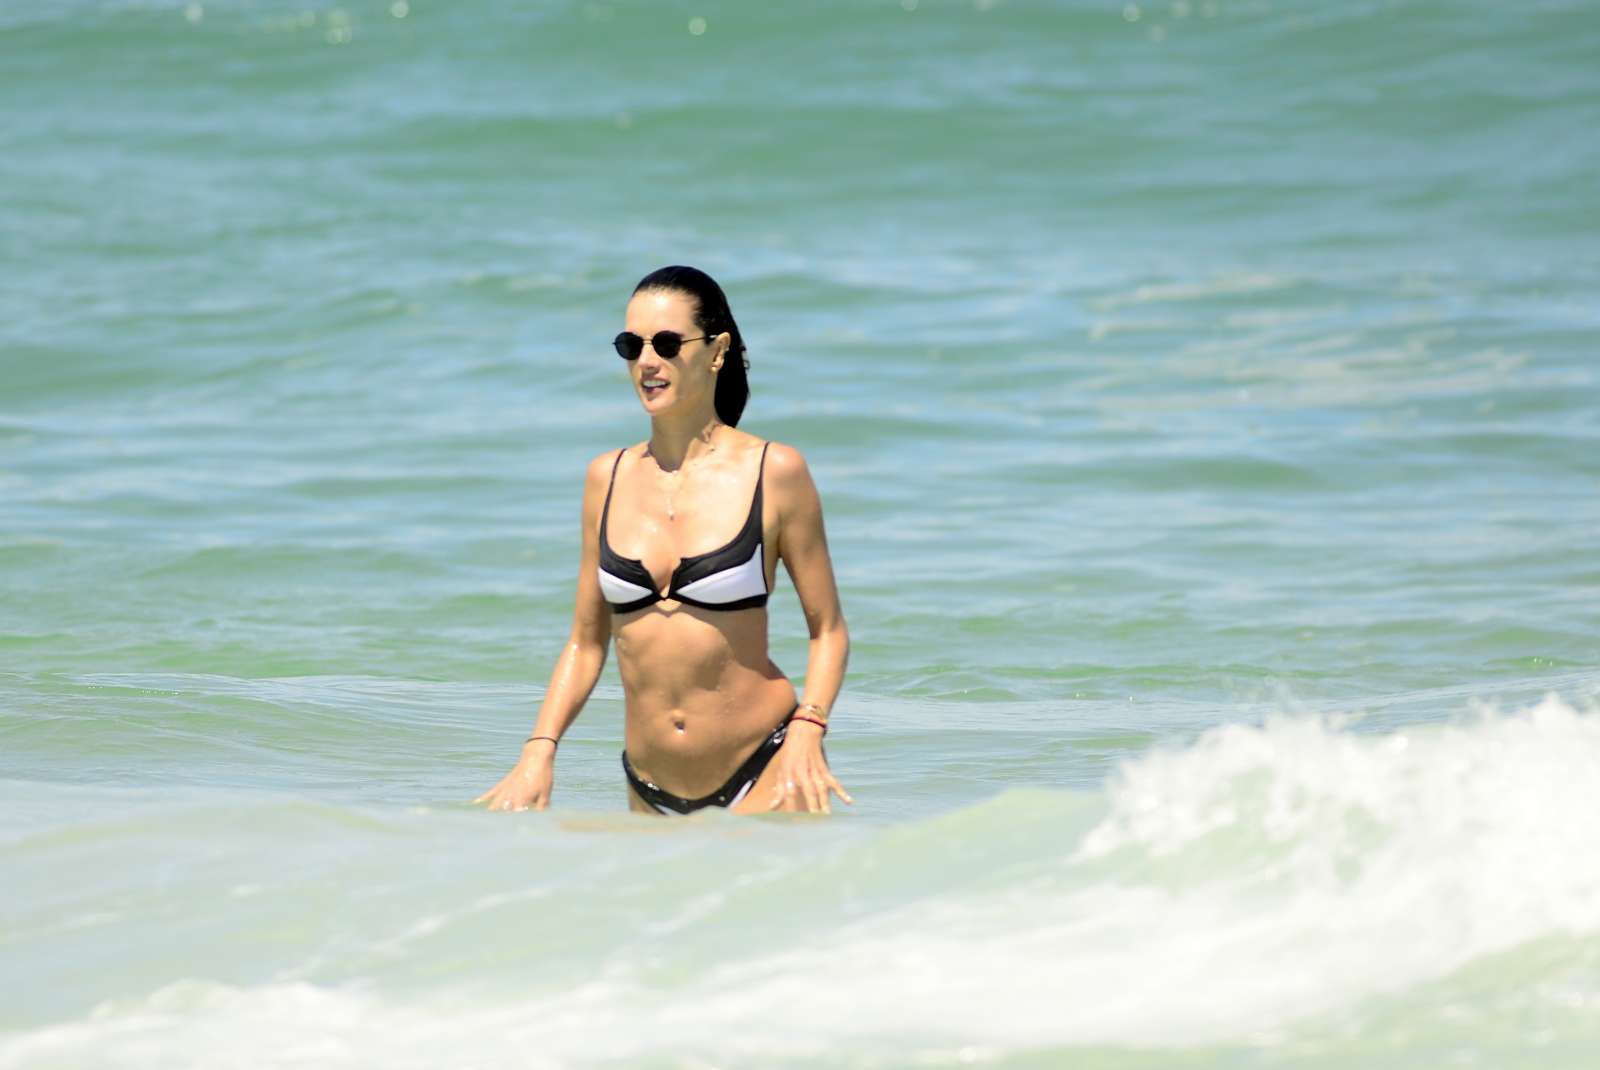 Alessandra Ambrosio in White and Black Bikini on the beach in Florianopolis